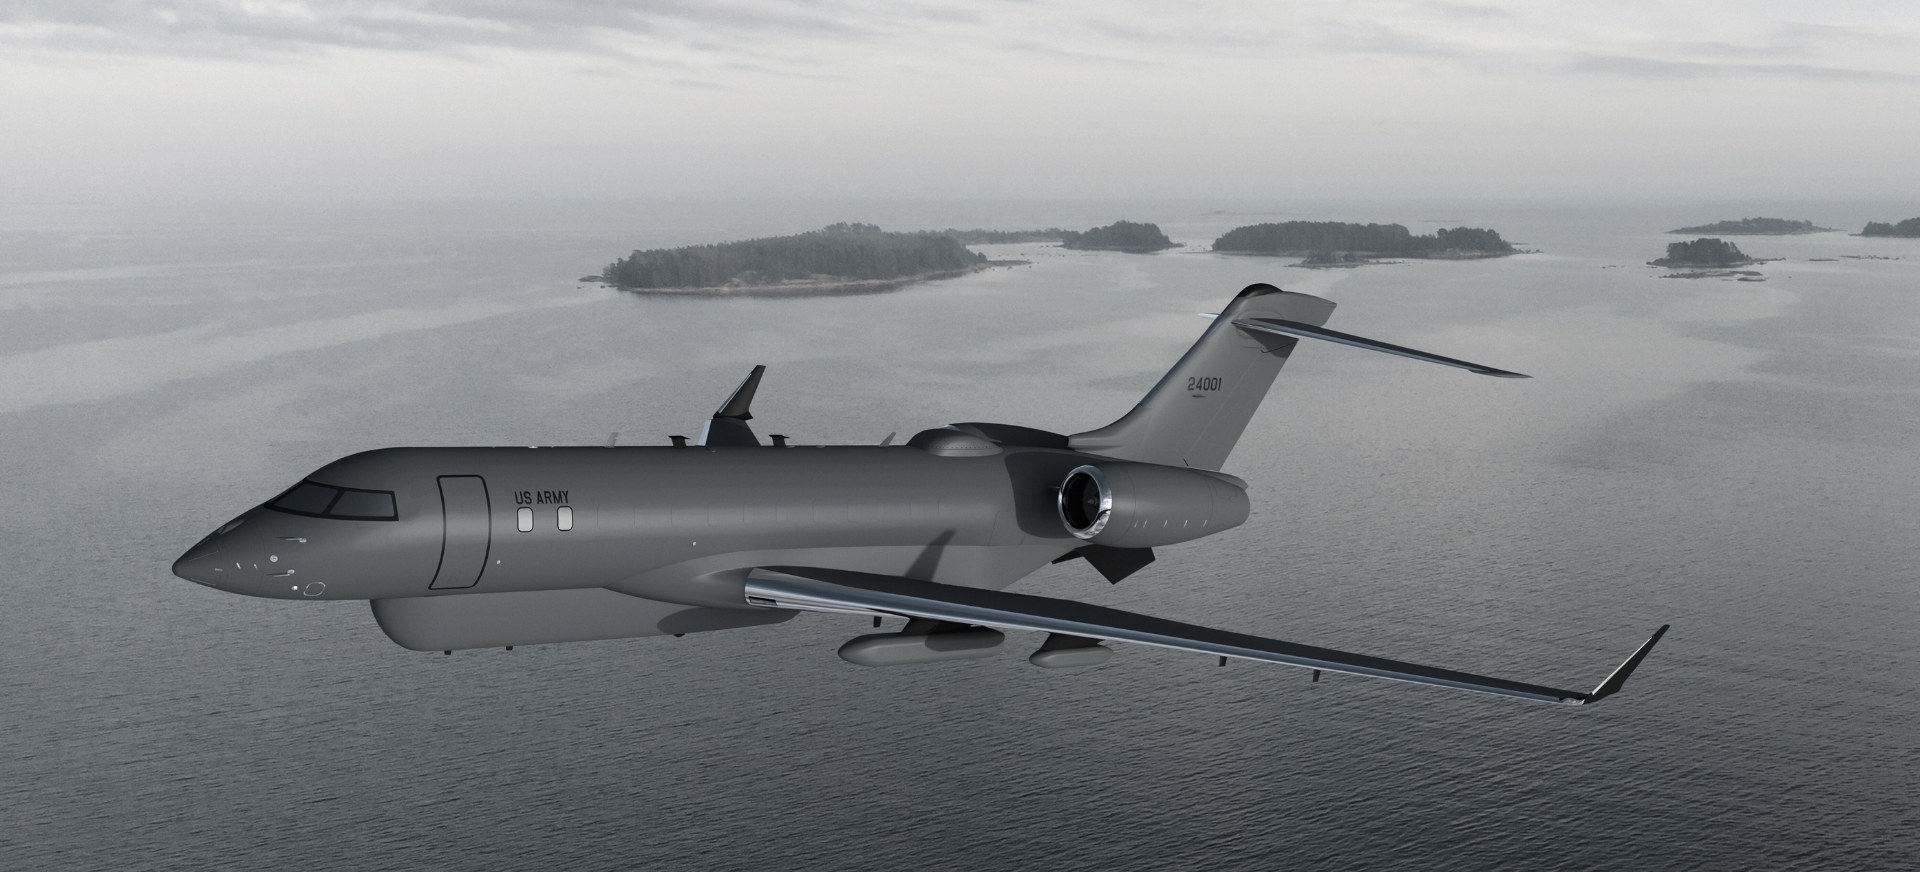 Bombardier Defense plane in Air